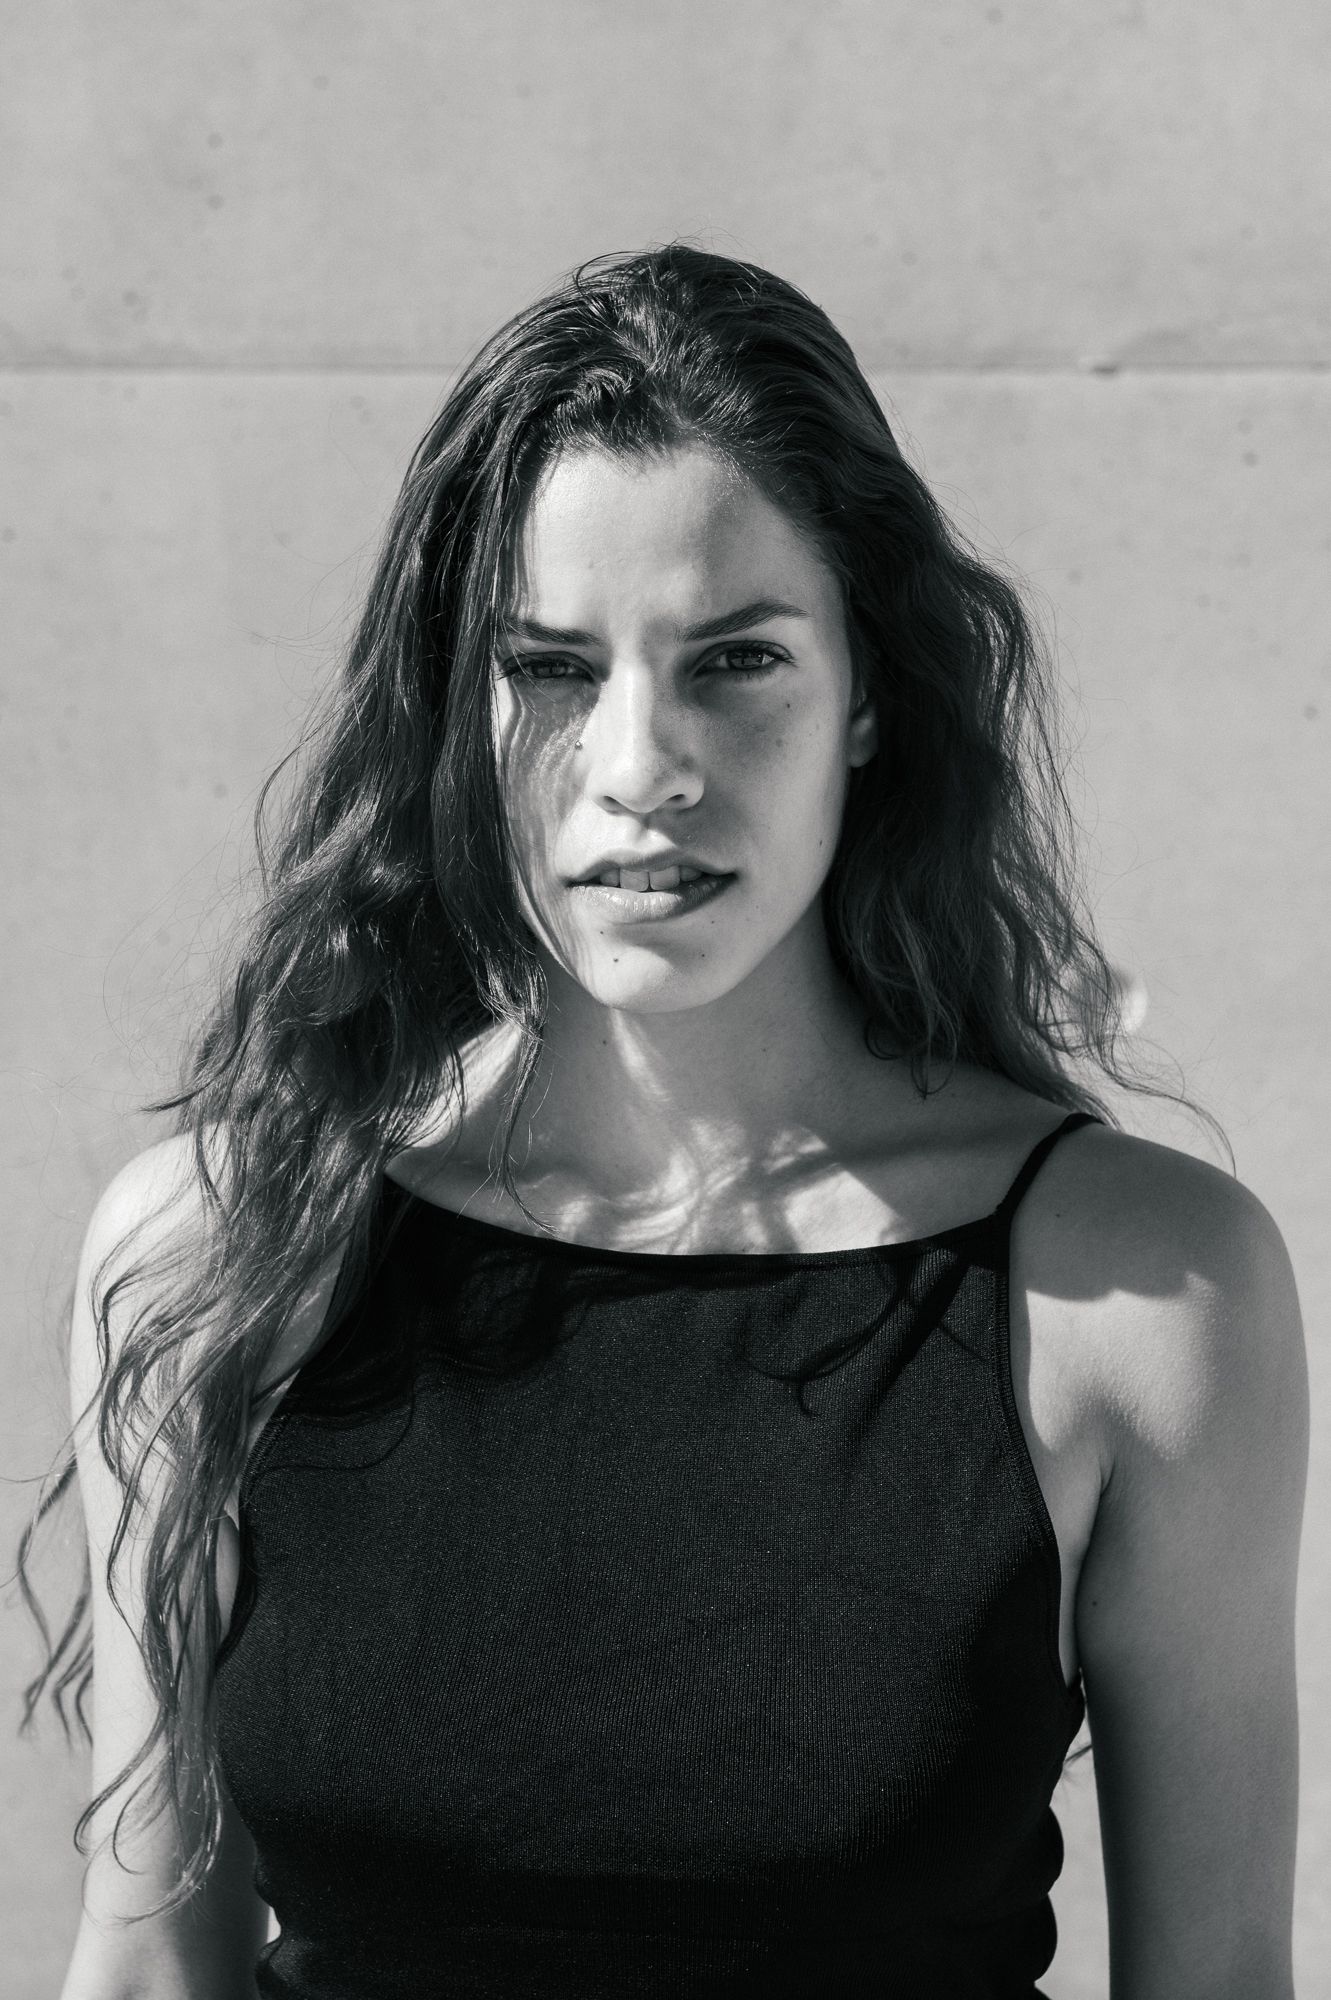 Laura - a model from Berlin, Germany